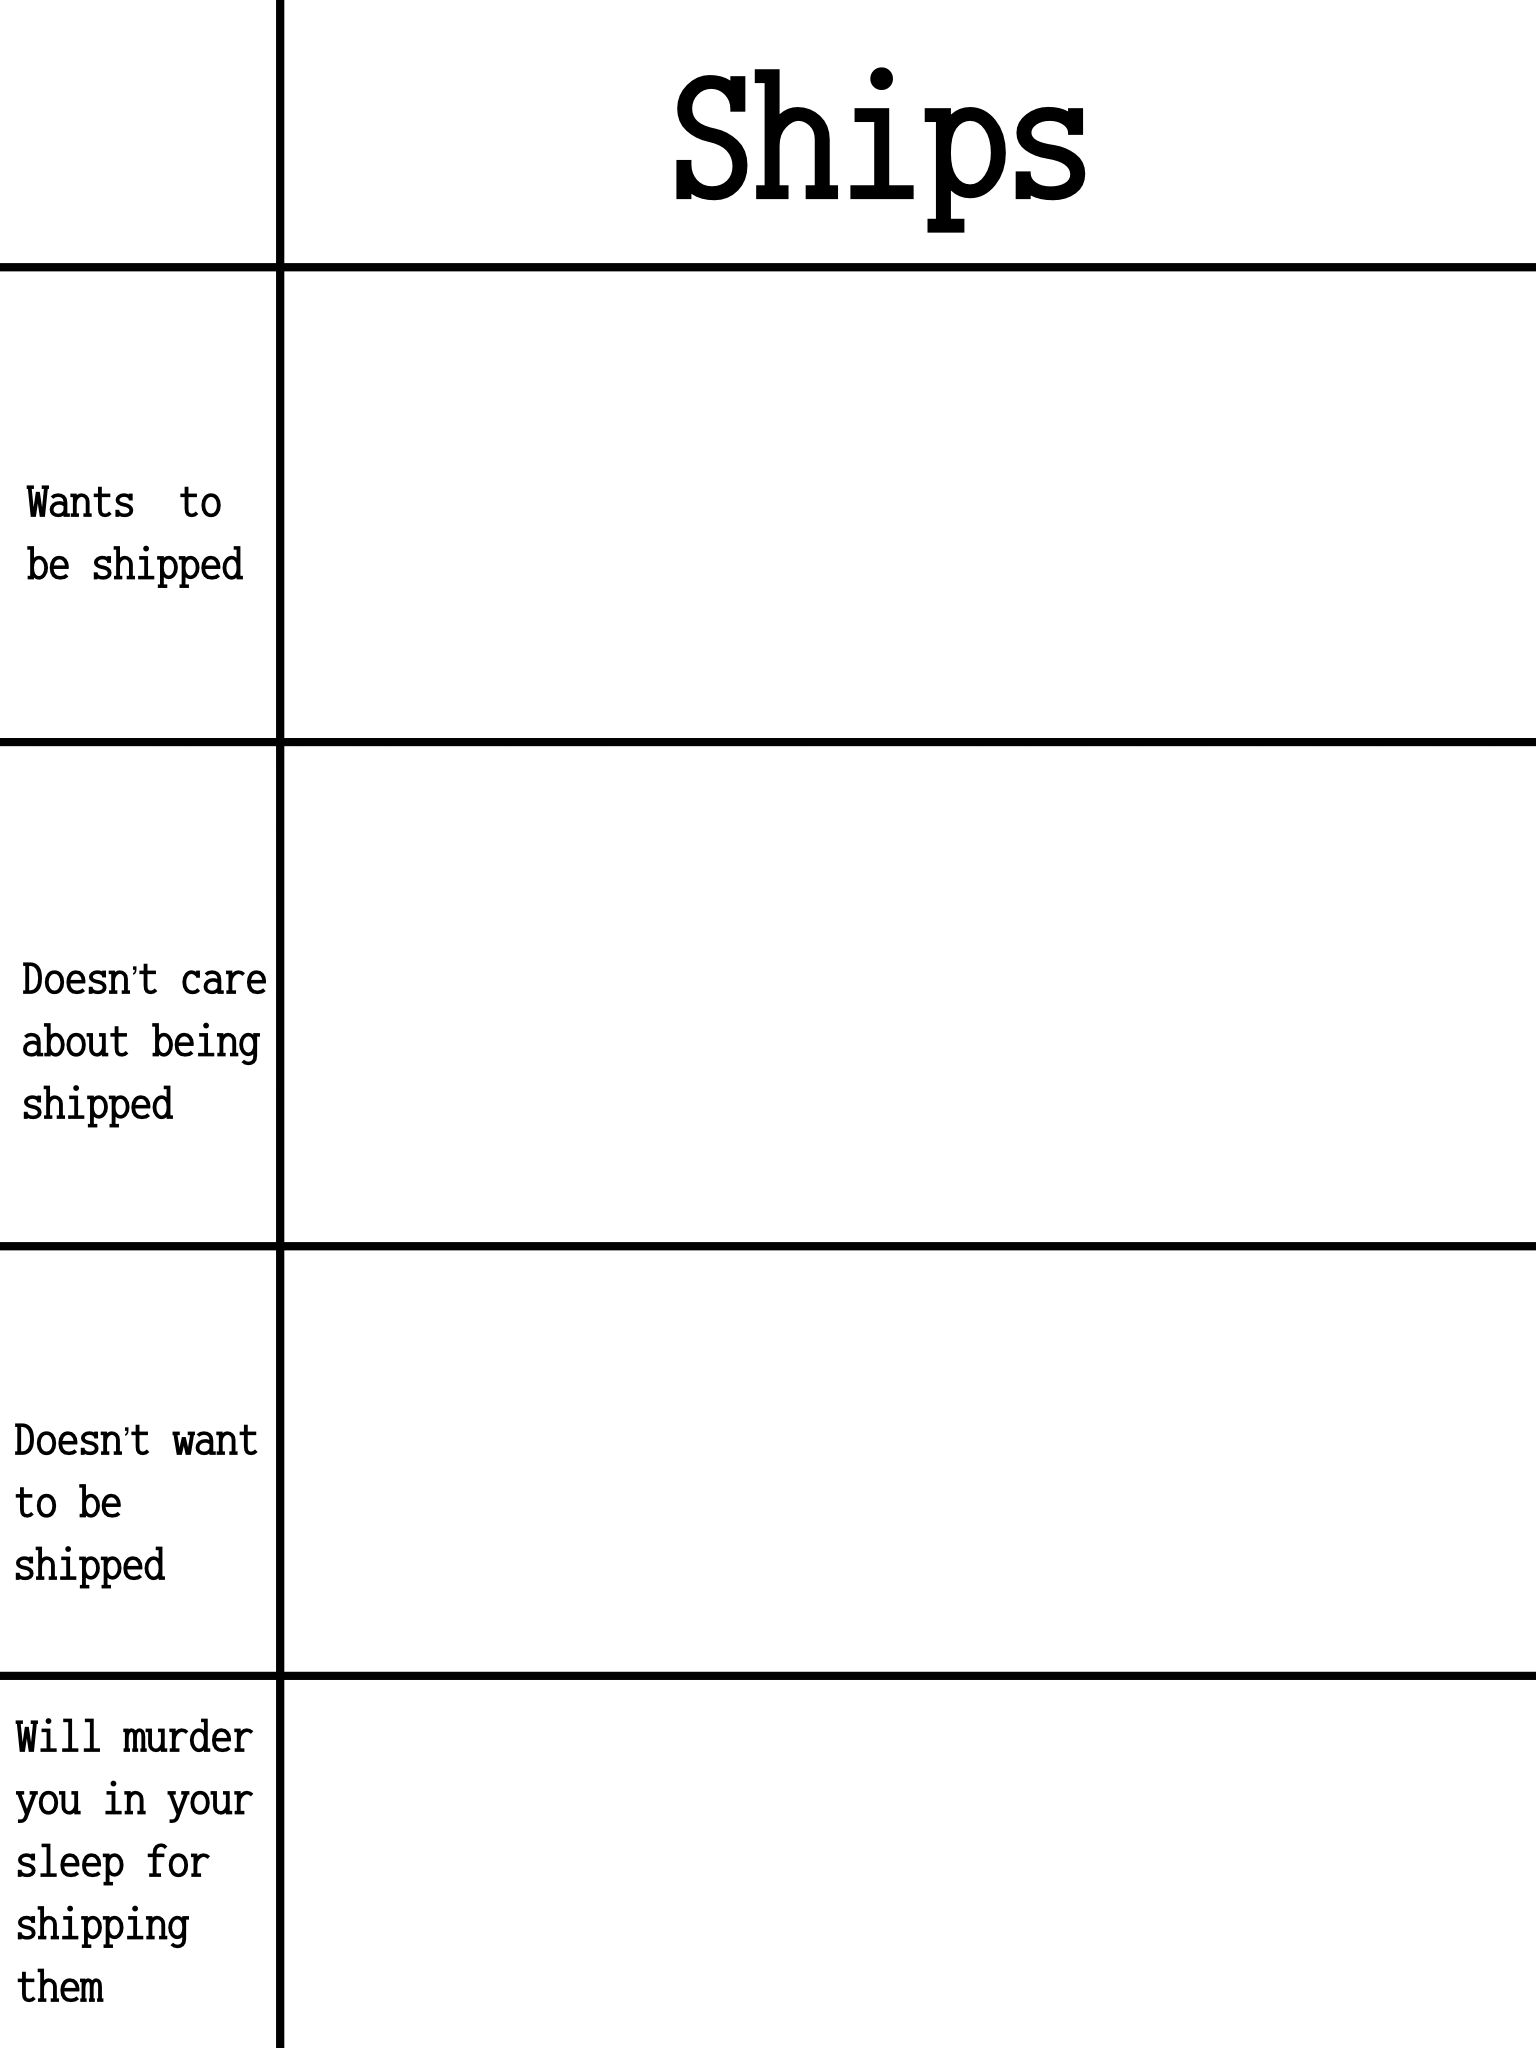 ships alignment chart Blank Meme Template